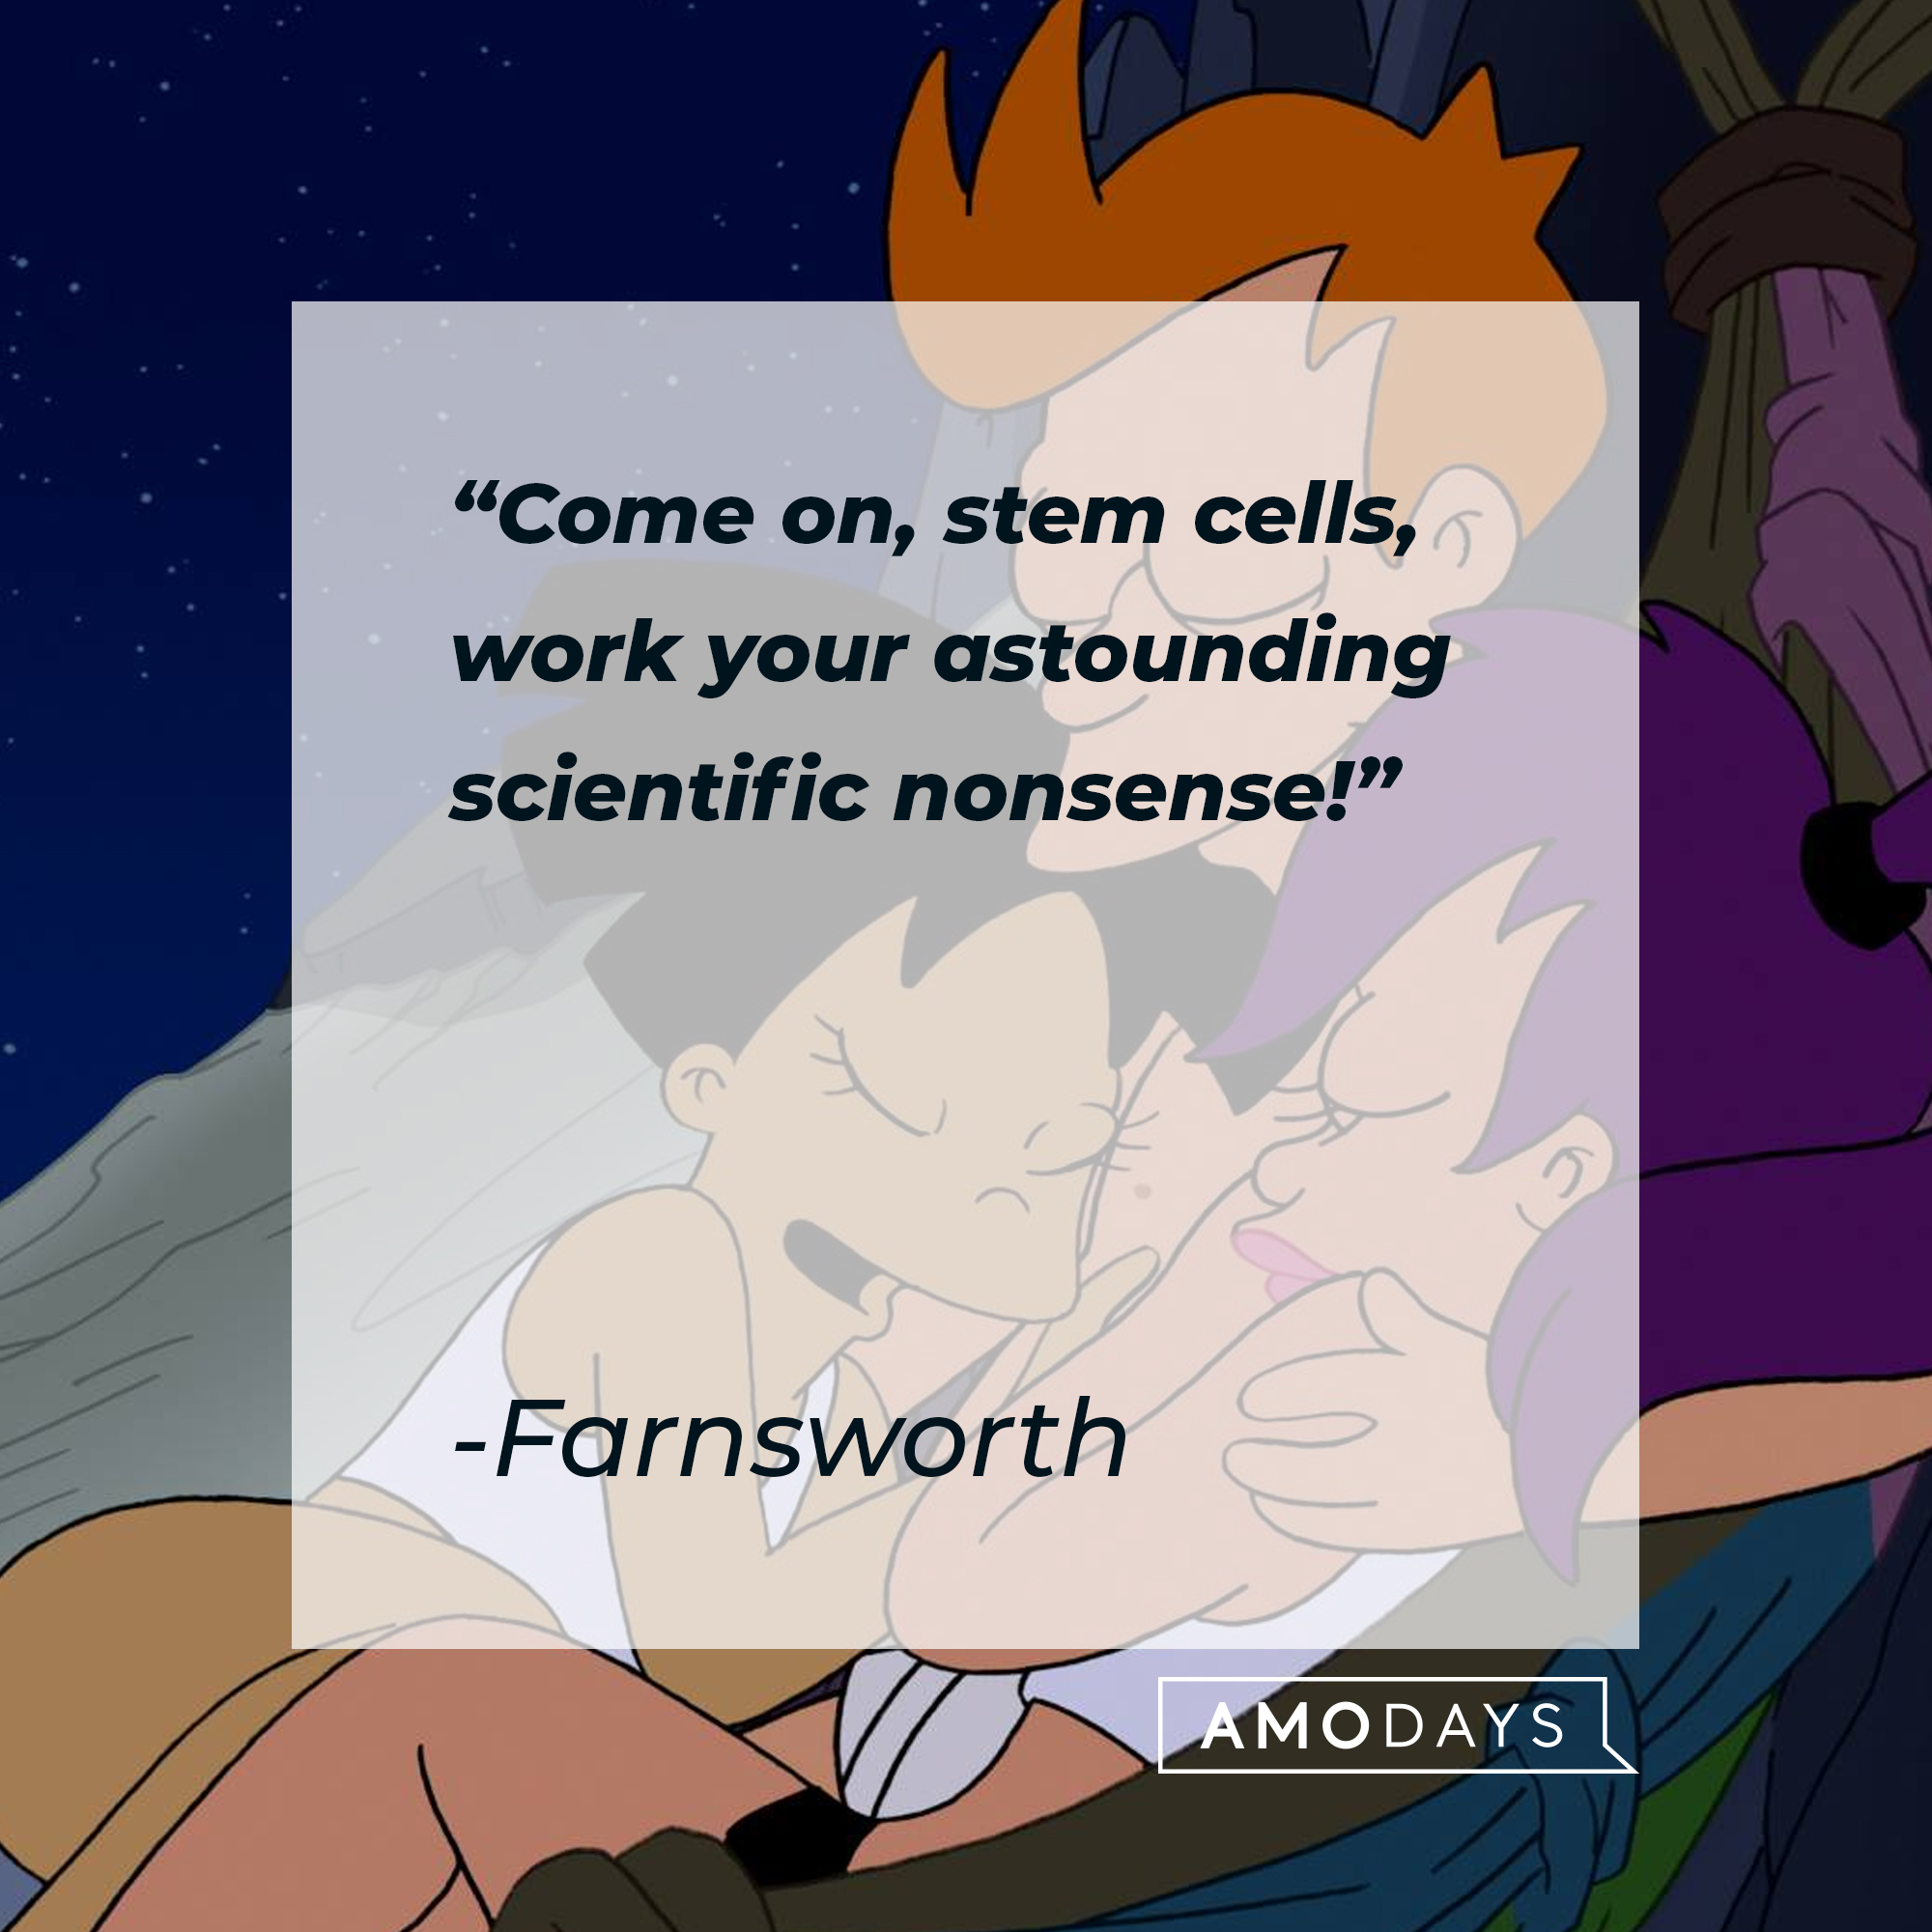 Farnsworth's quote: "Come on, stem cells, work your astounding scientific nonsense!" | Source: Facebook.com/Futurama